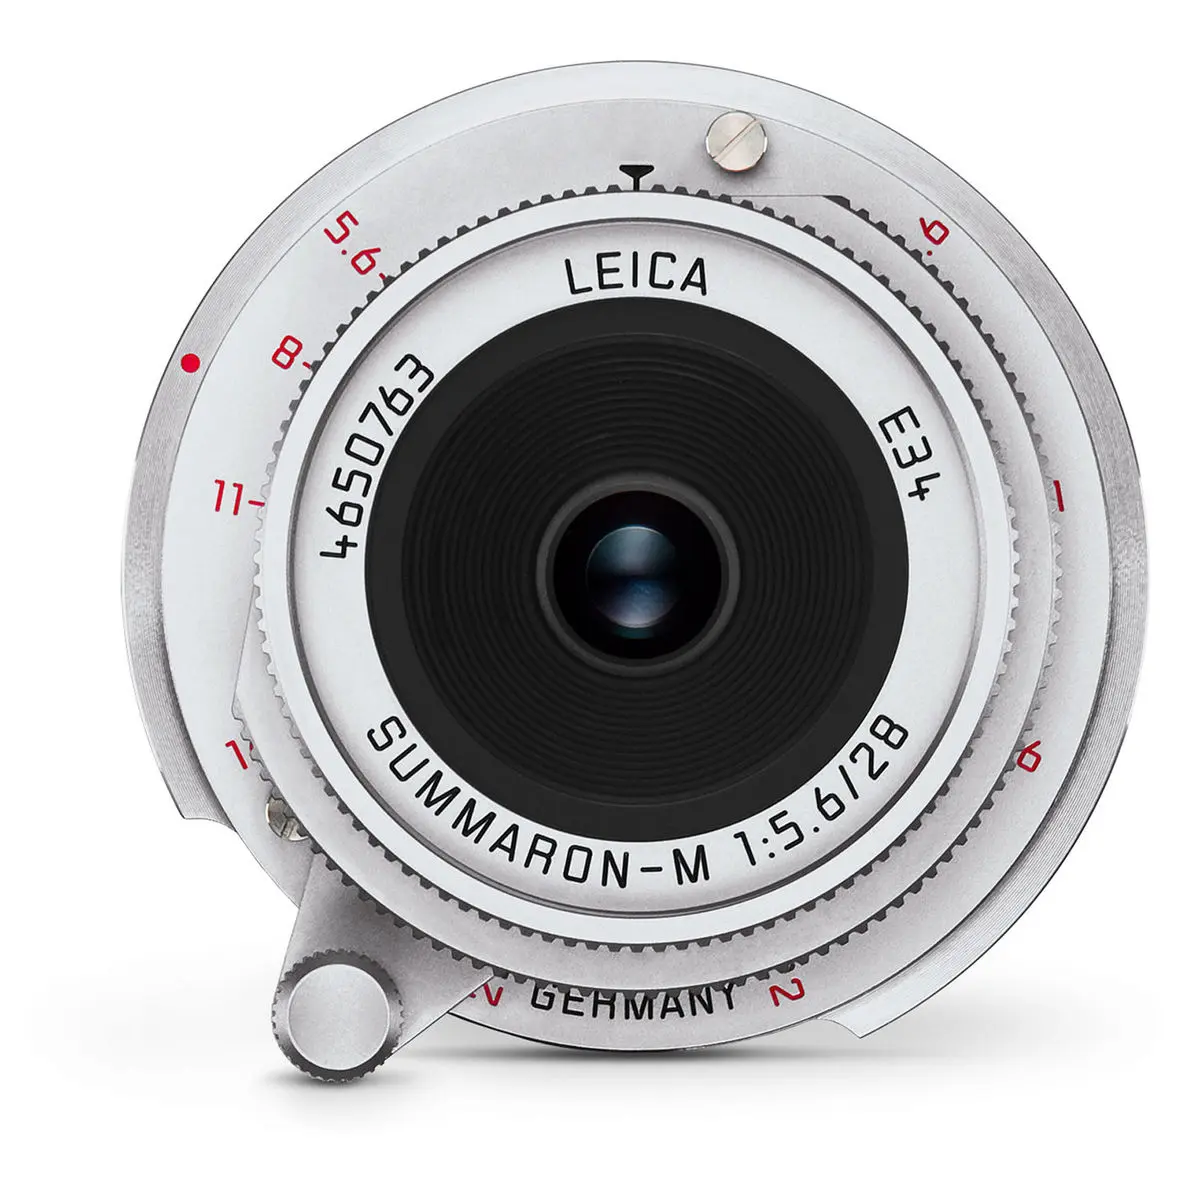 2. Leica Summaron-M 28mm F5.6 (11695) Lens